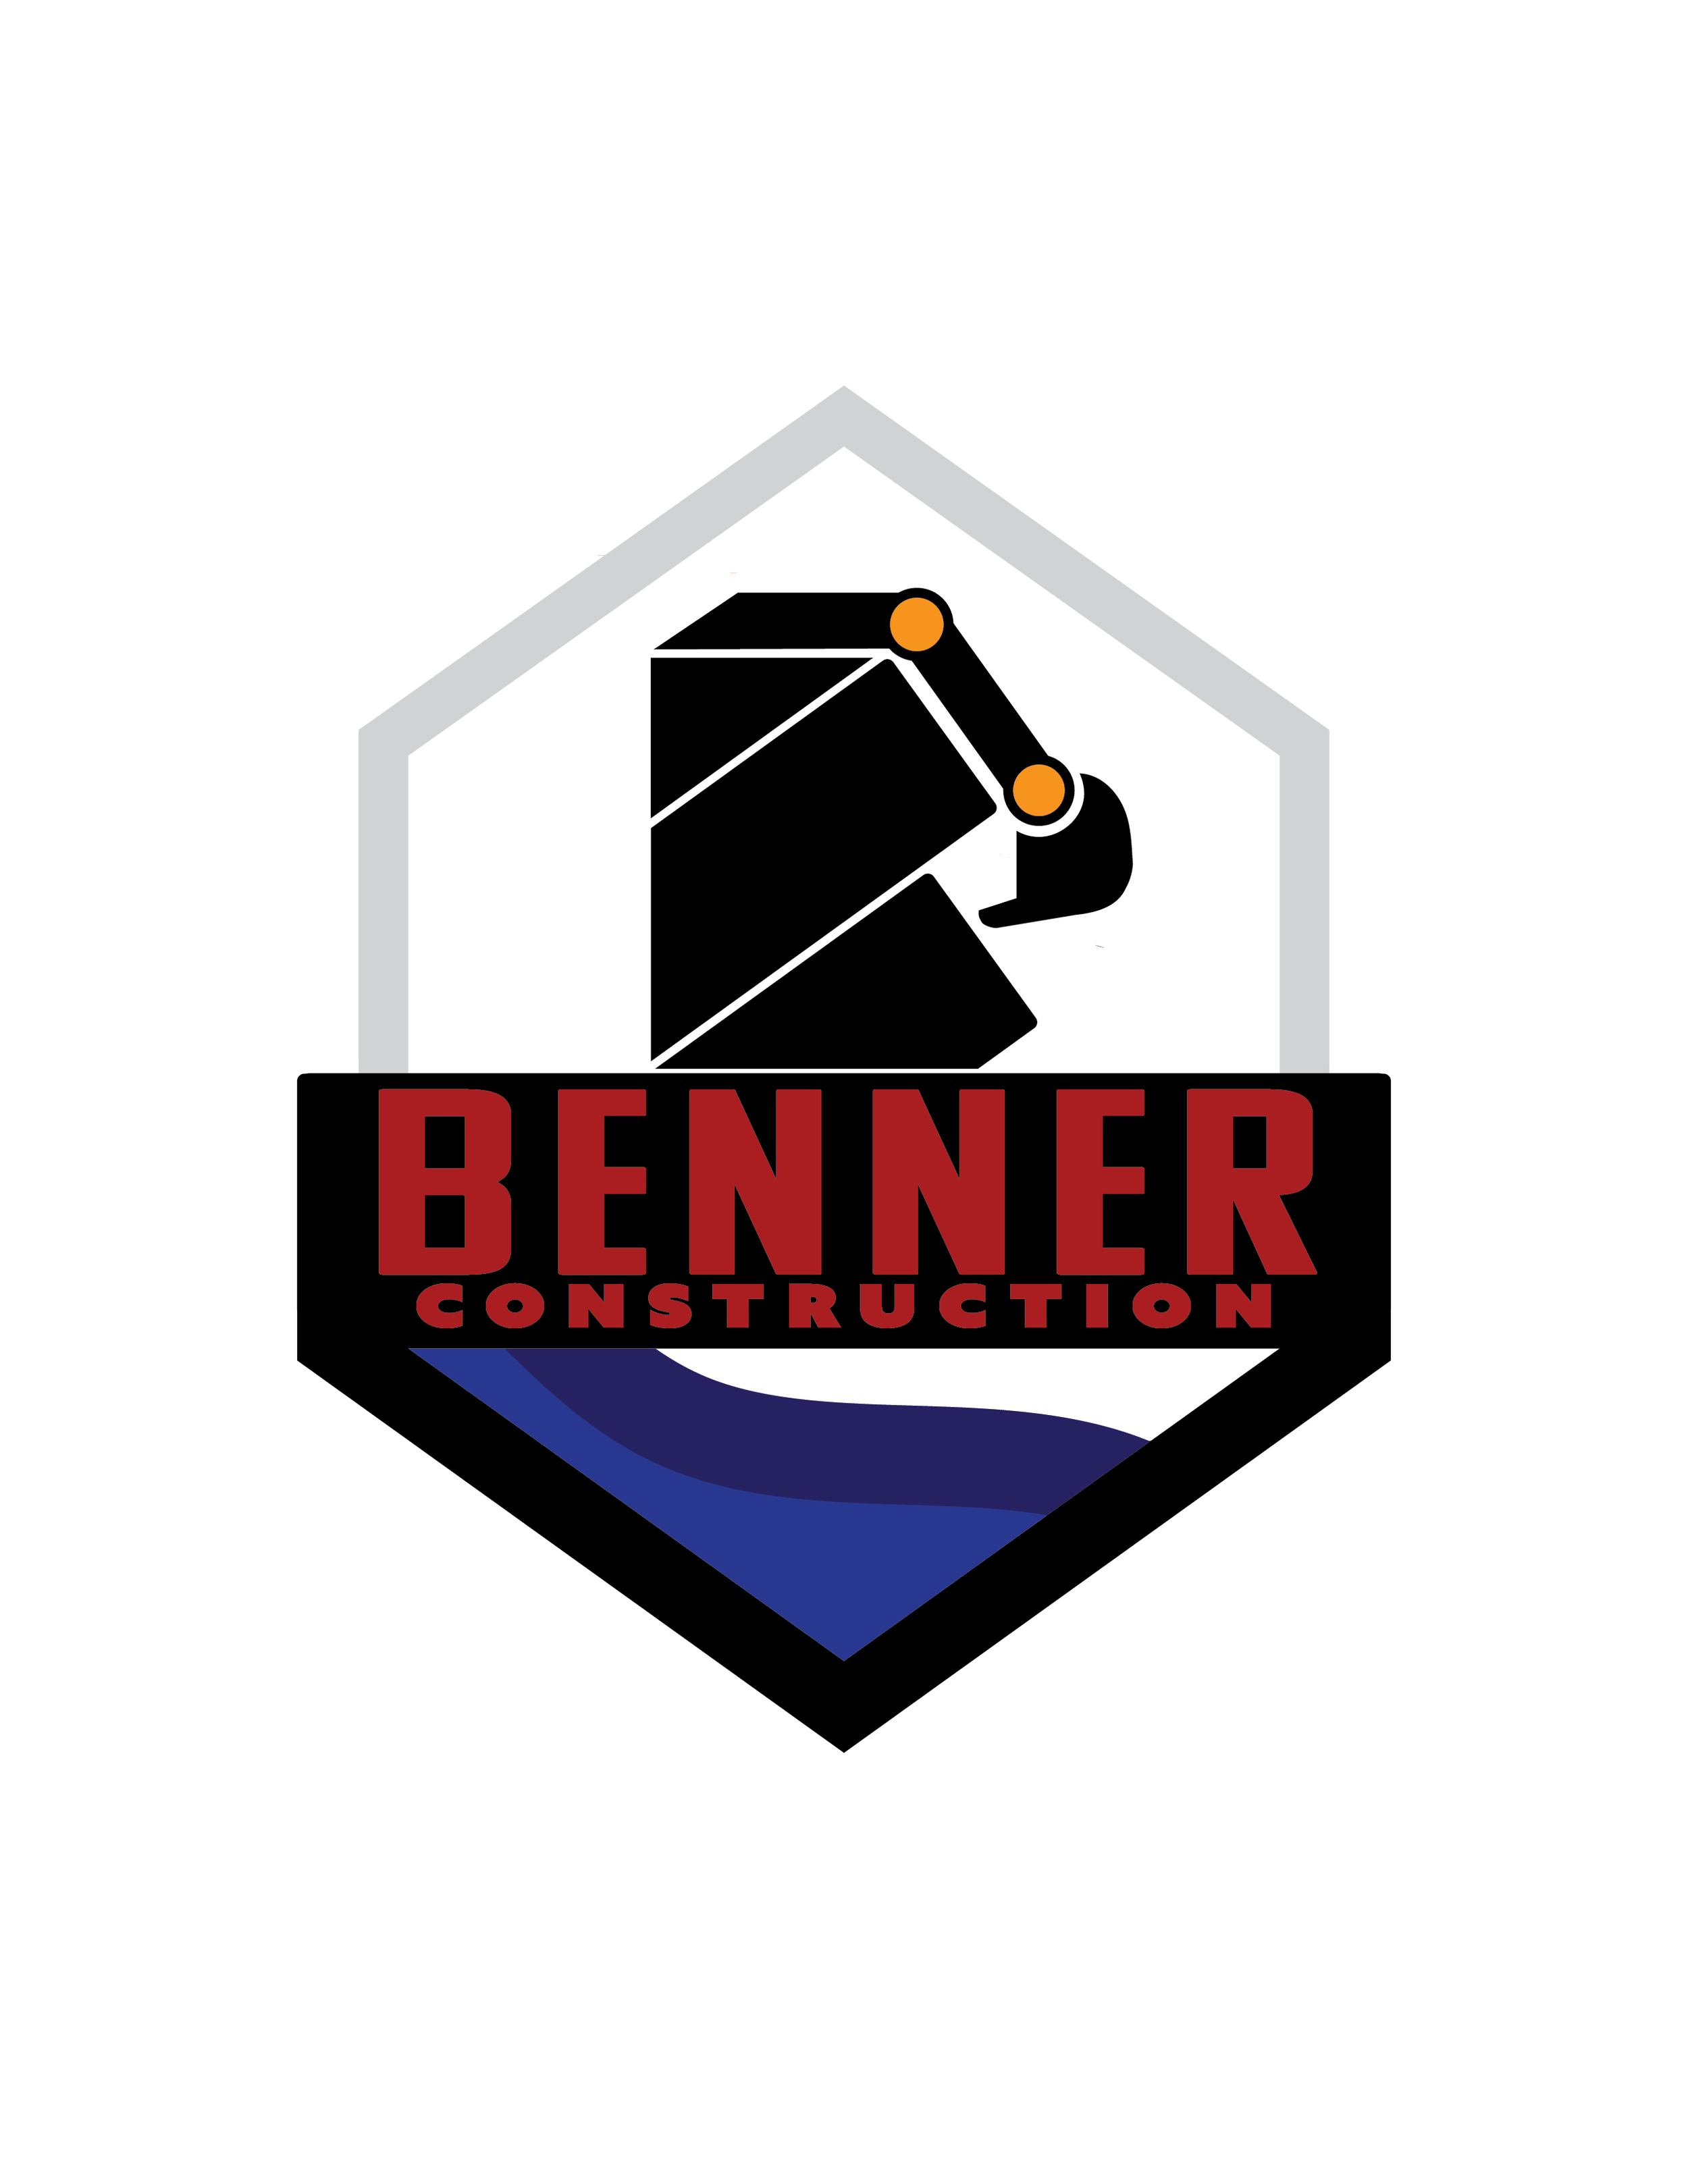 Benner Construction